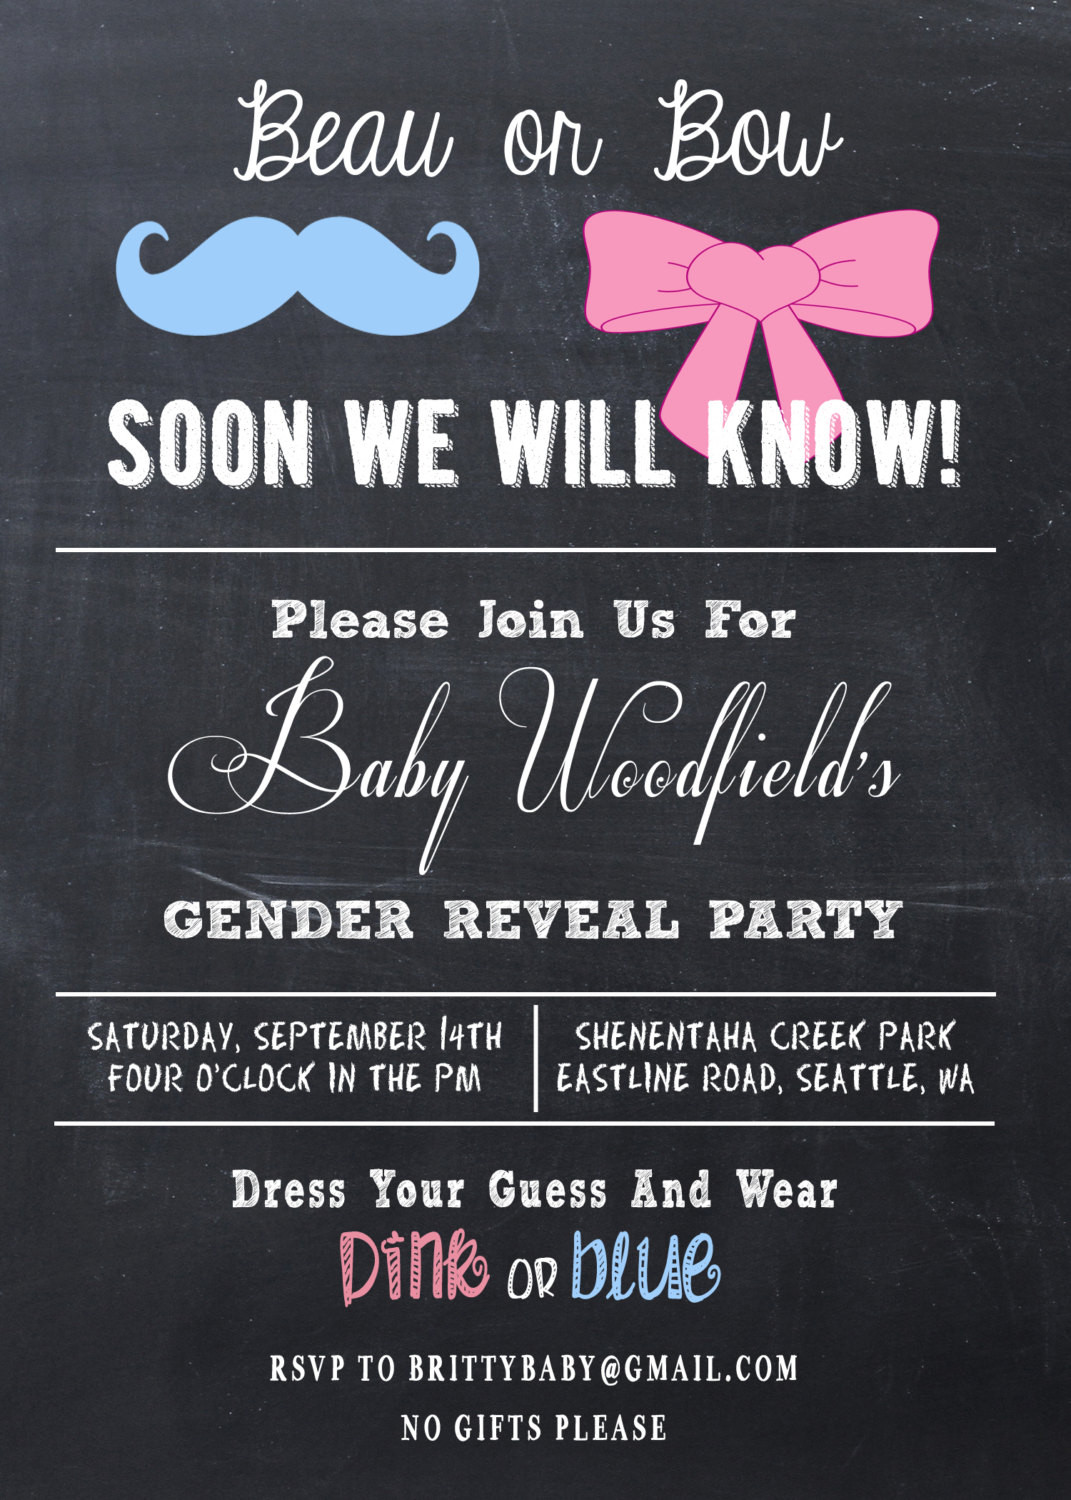 Gender Reveal Party Invitation Ideas
 Gender Reveal Party Invitation Beau or Bow by